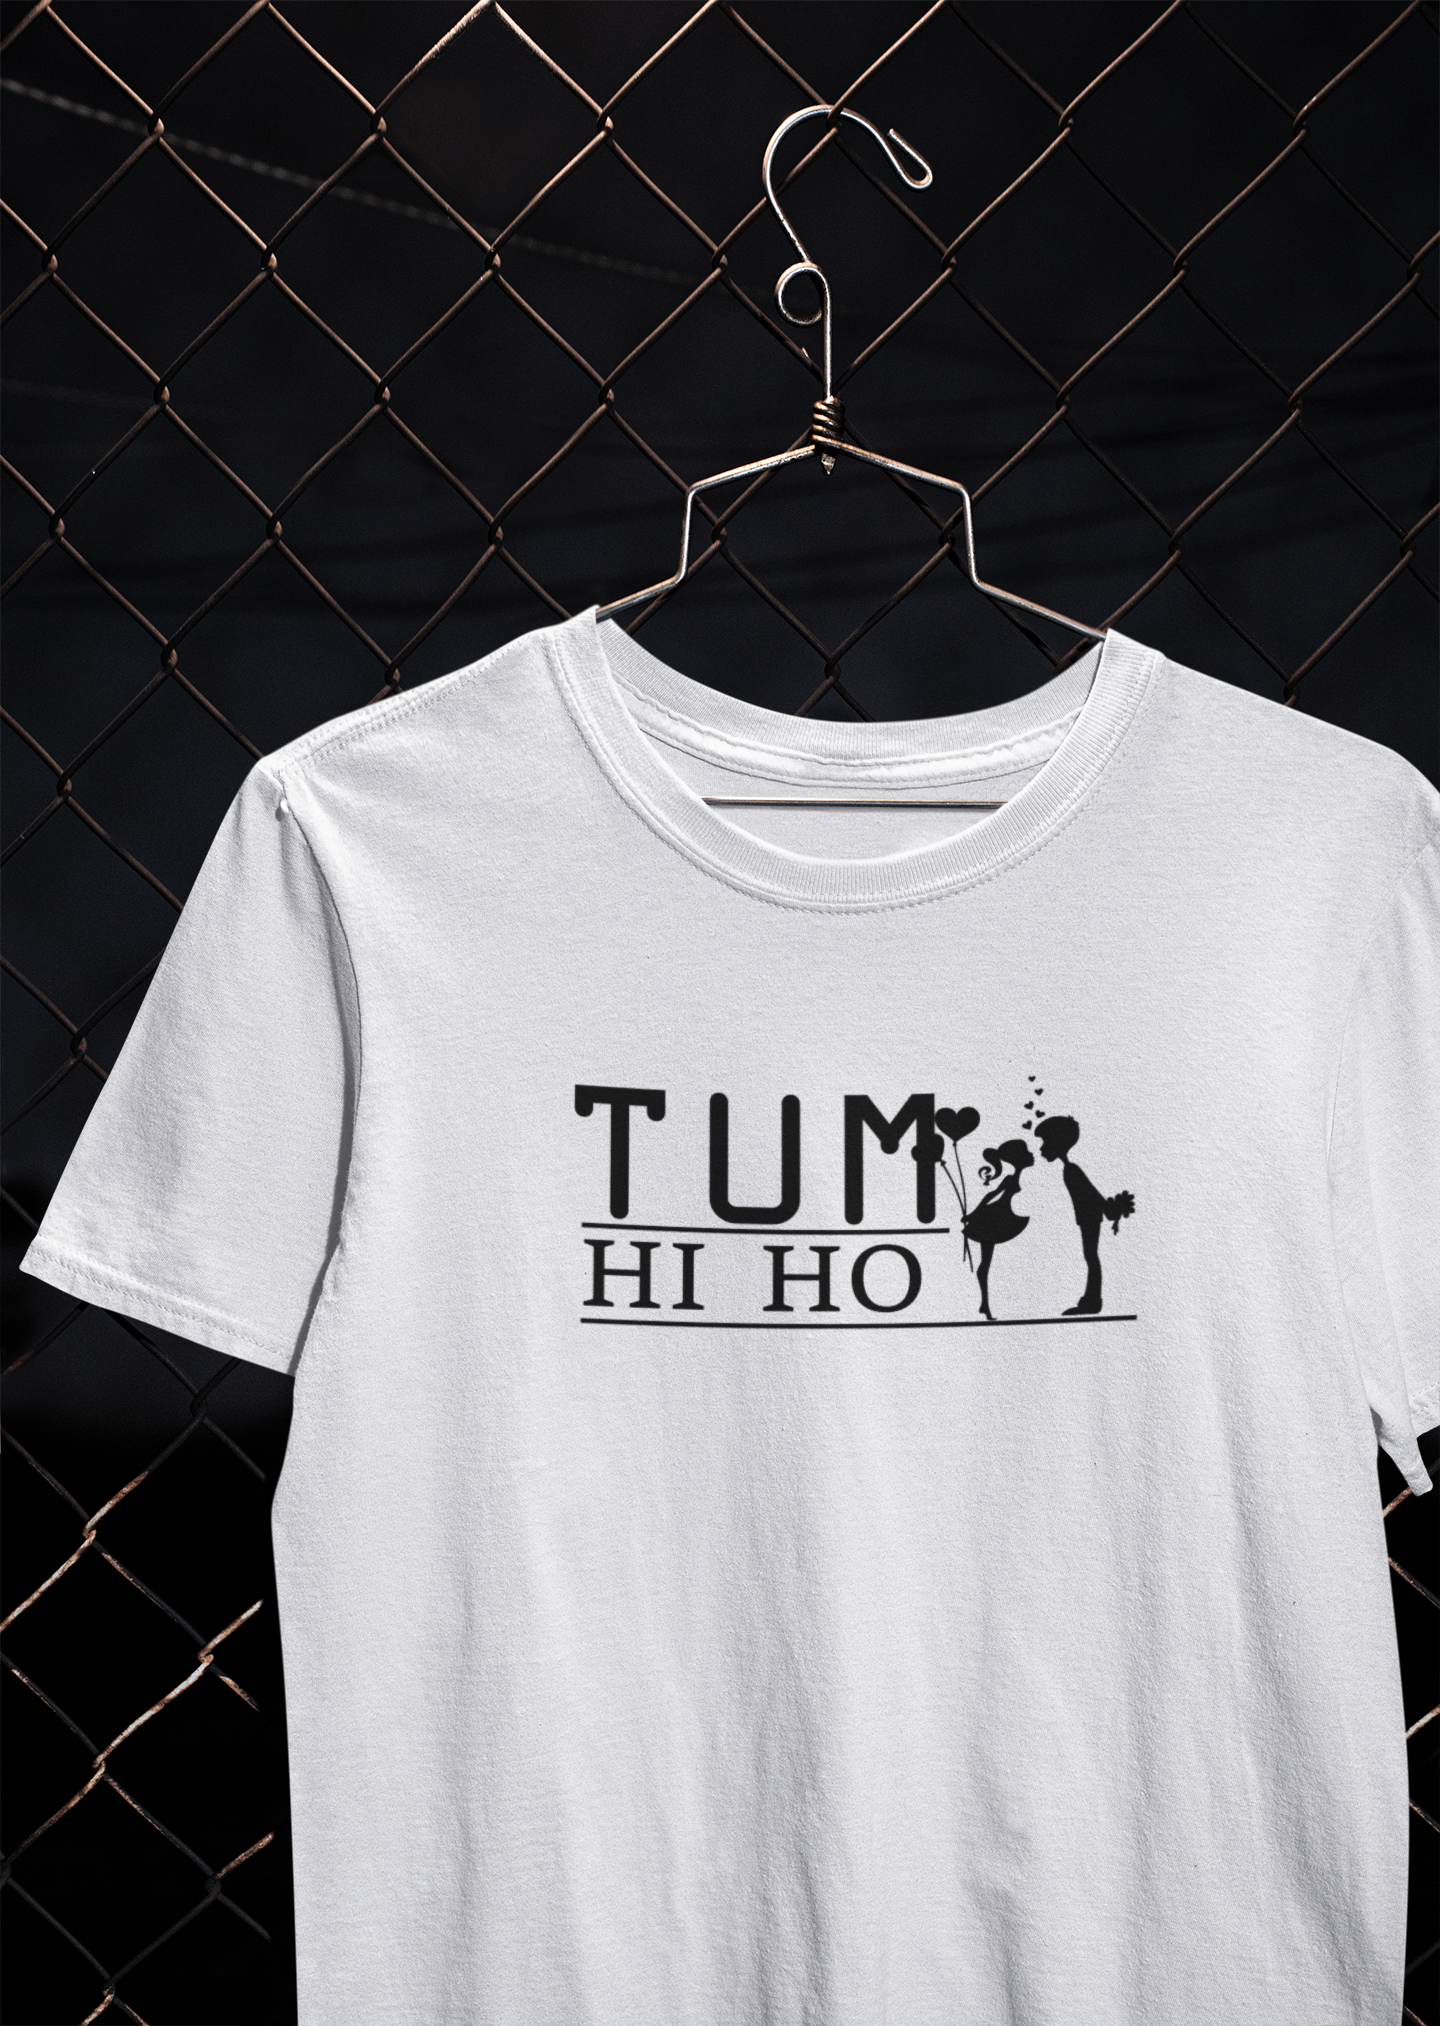 Tum Hi Ho Couple Half Sleeves T-Shirts -FunkyTeesClub